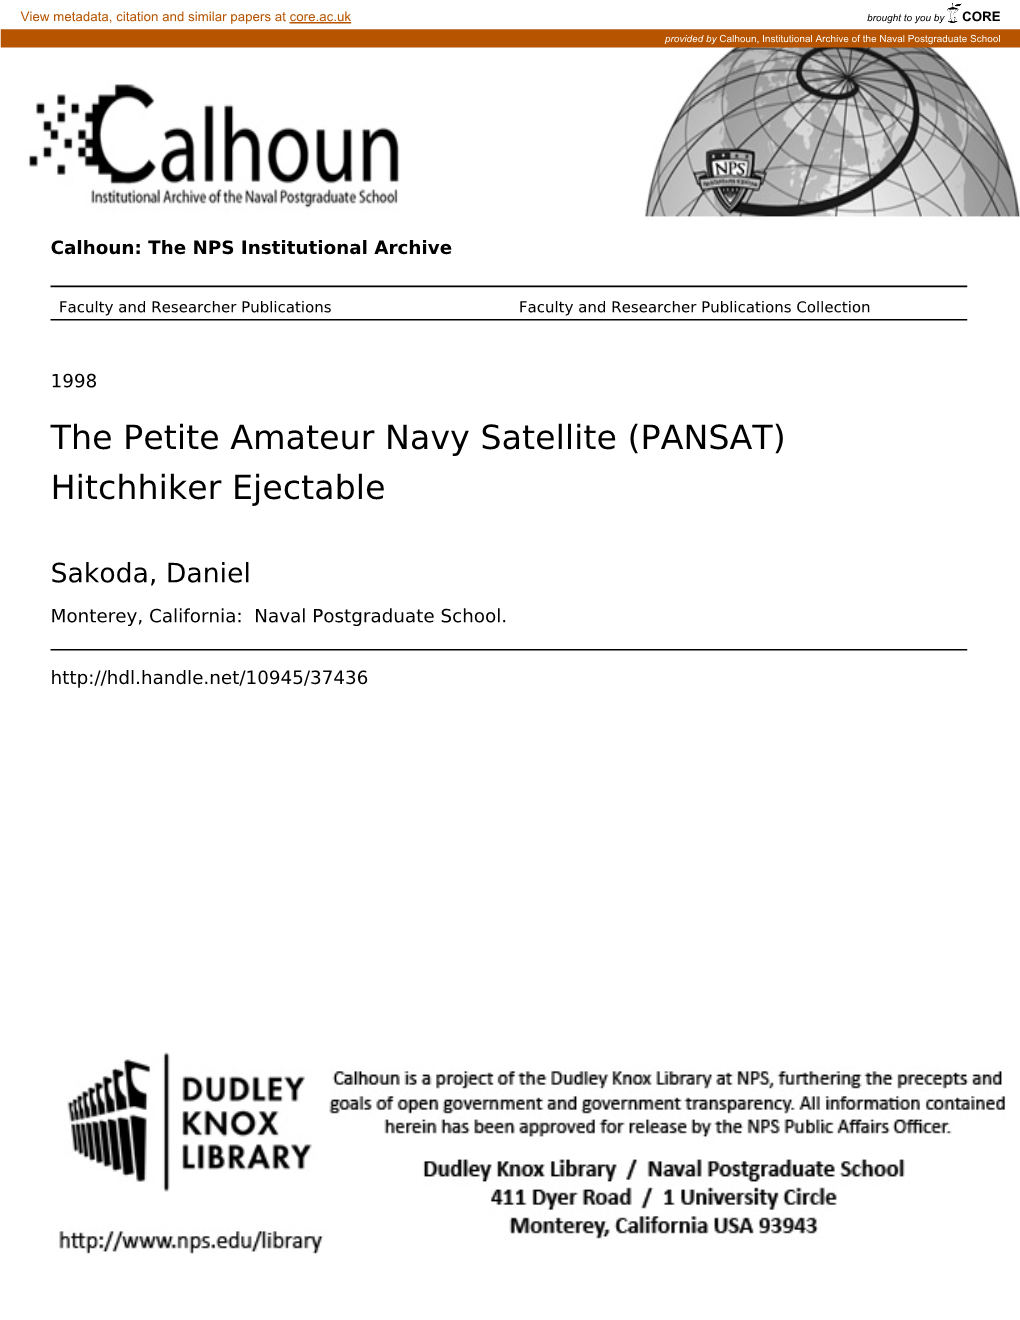 The Petite Amateur Navy Satellite (PANSAT) Hitchhiker Ejectable